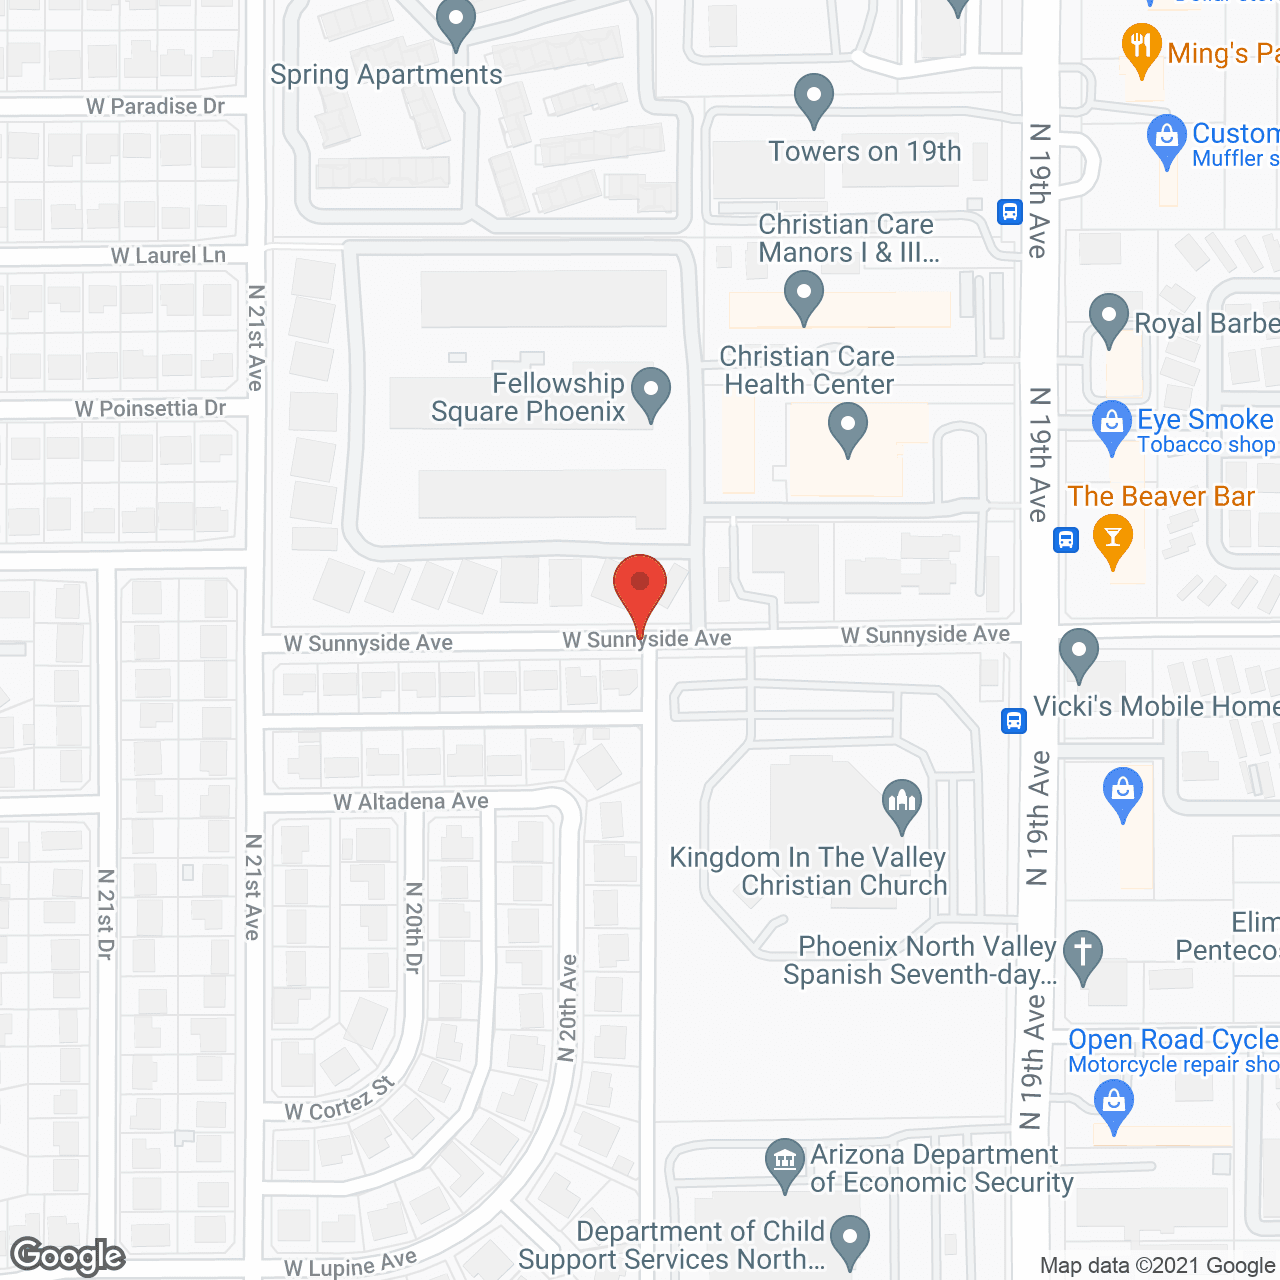 Fellowship Square Phoenix (a Life Plan Community) in google map